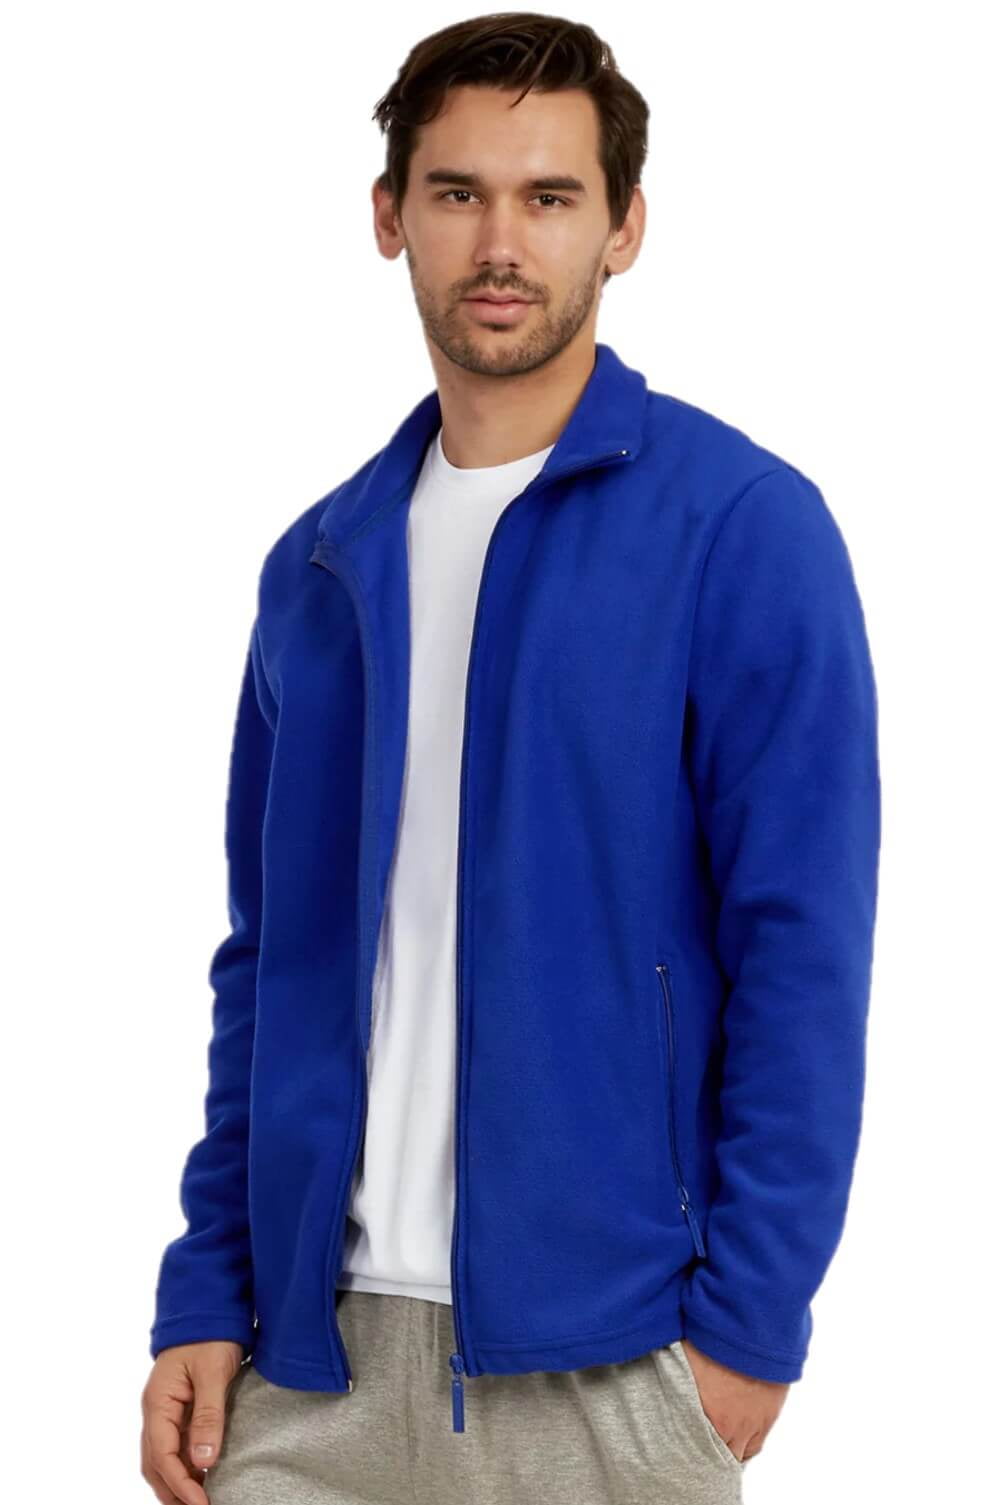 Men's Full-Zip Polar Fleece Jacket, Royal Blue 2XL, 1 Count, 1 Pack